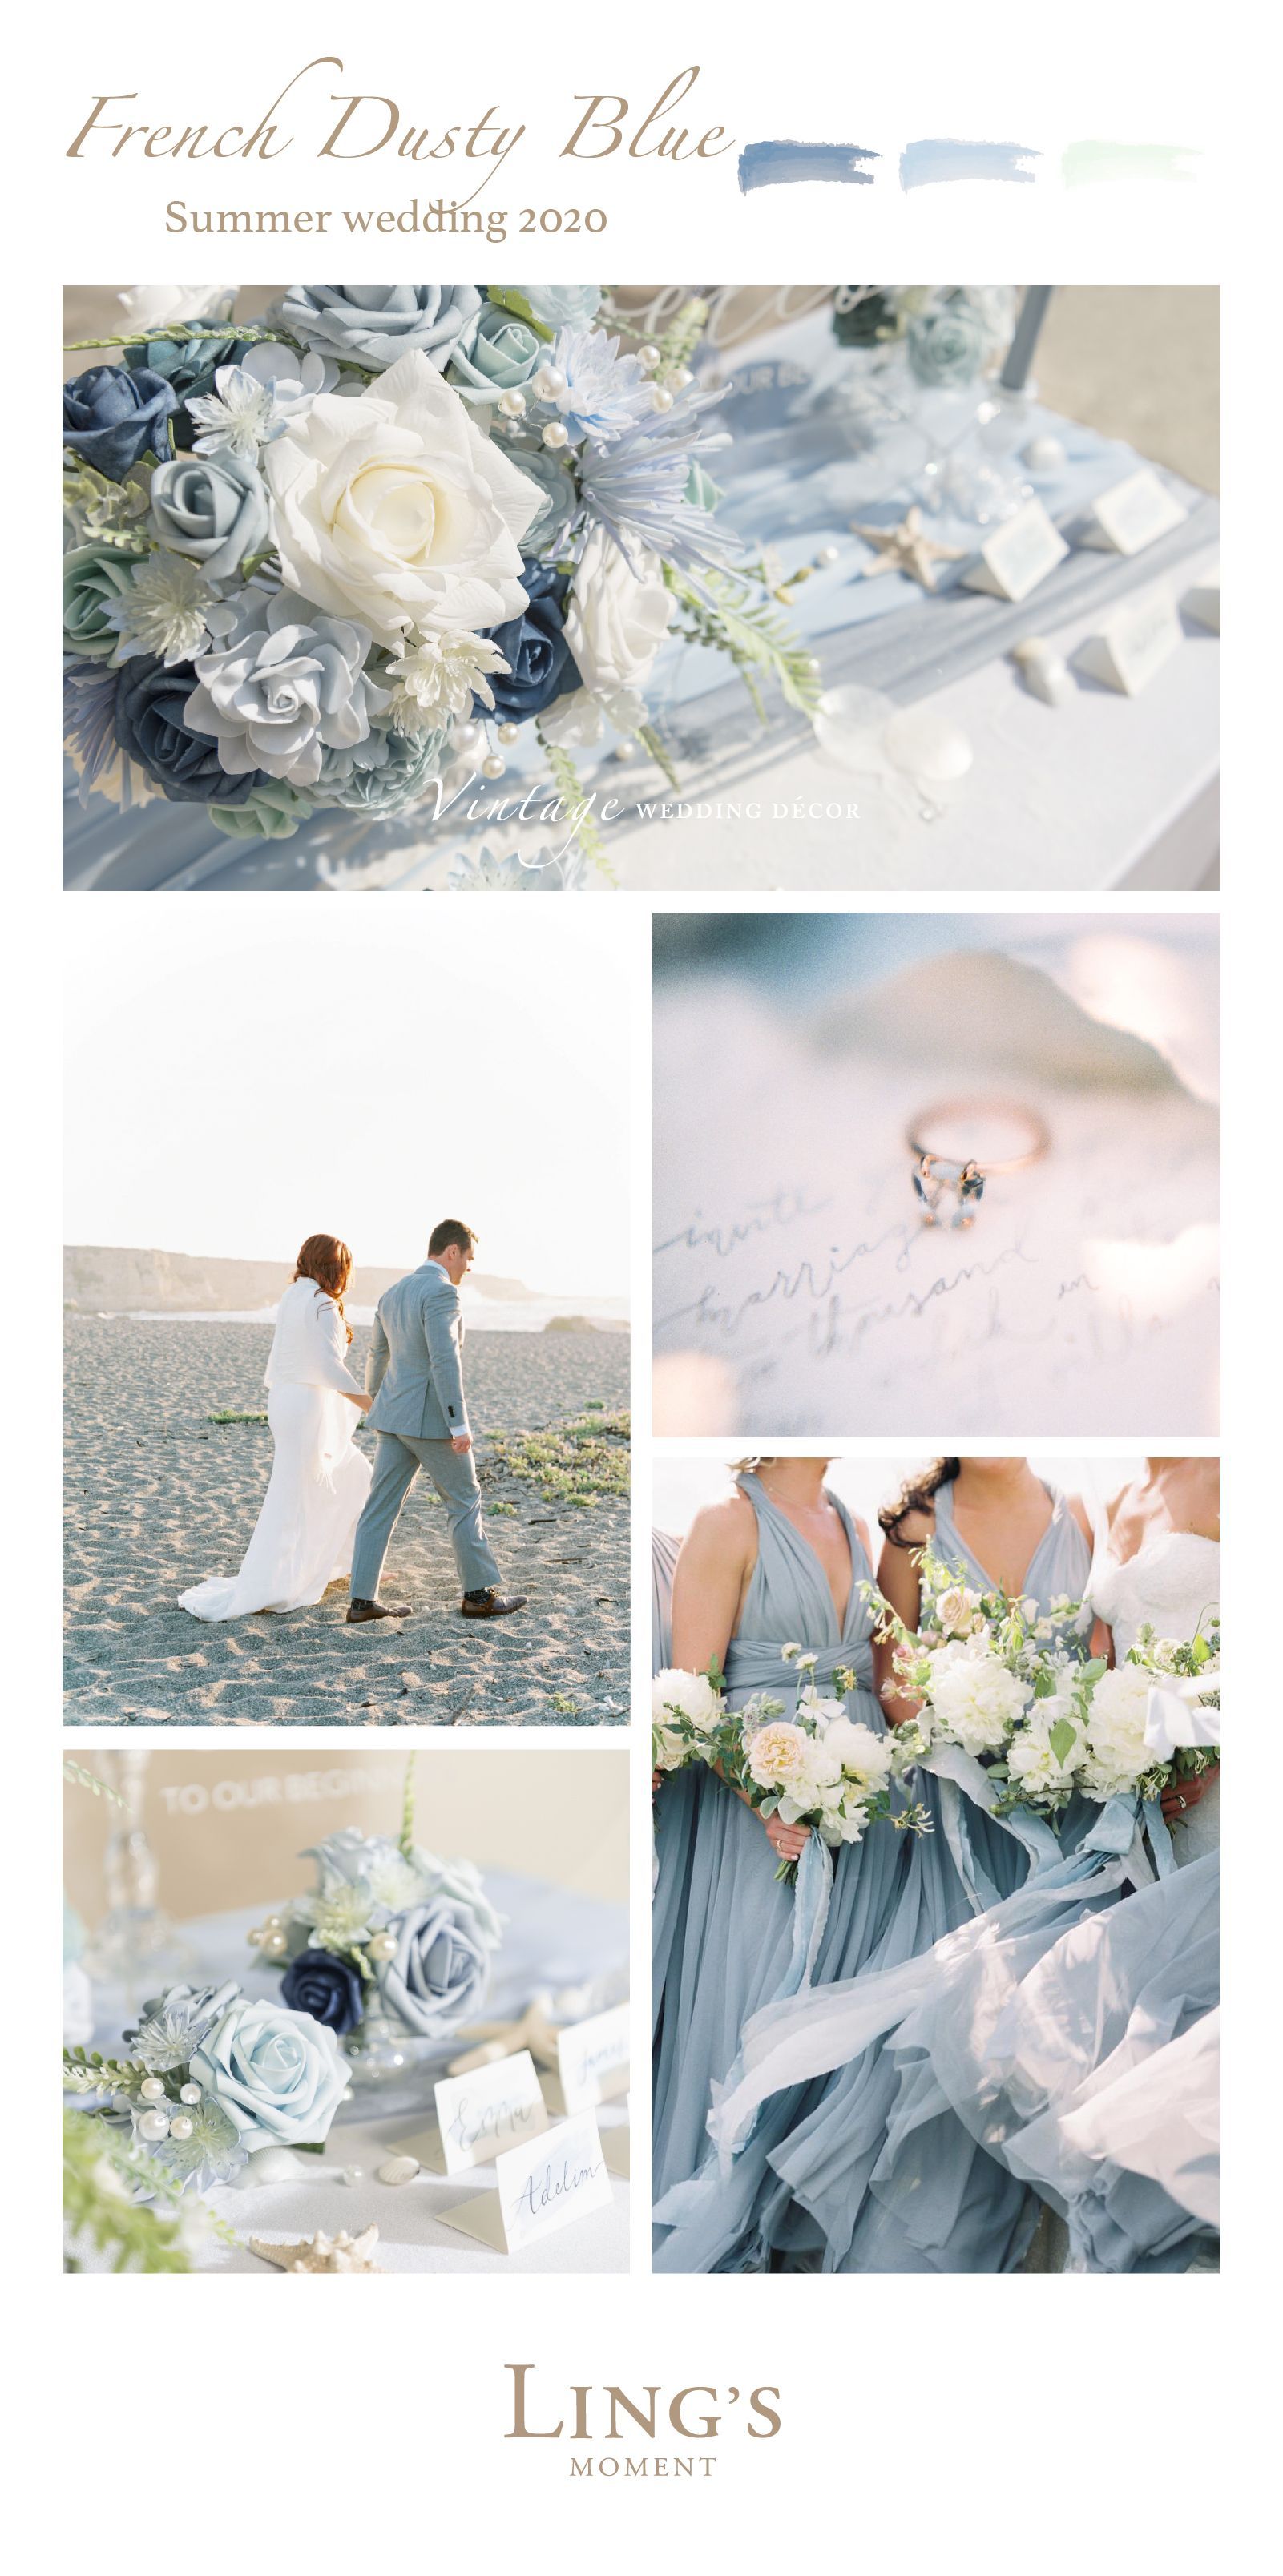 Spring Wedding 2020 - French Dusty Blue Wedding Decor, Flowers Combo 10% Off Now! -   19 wedding Spring ideas